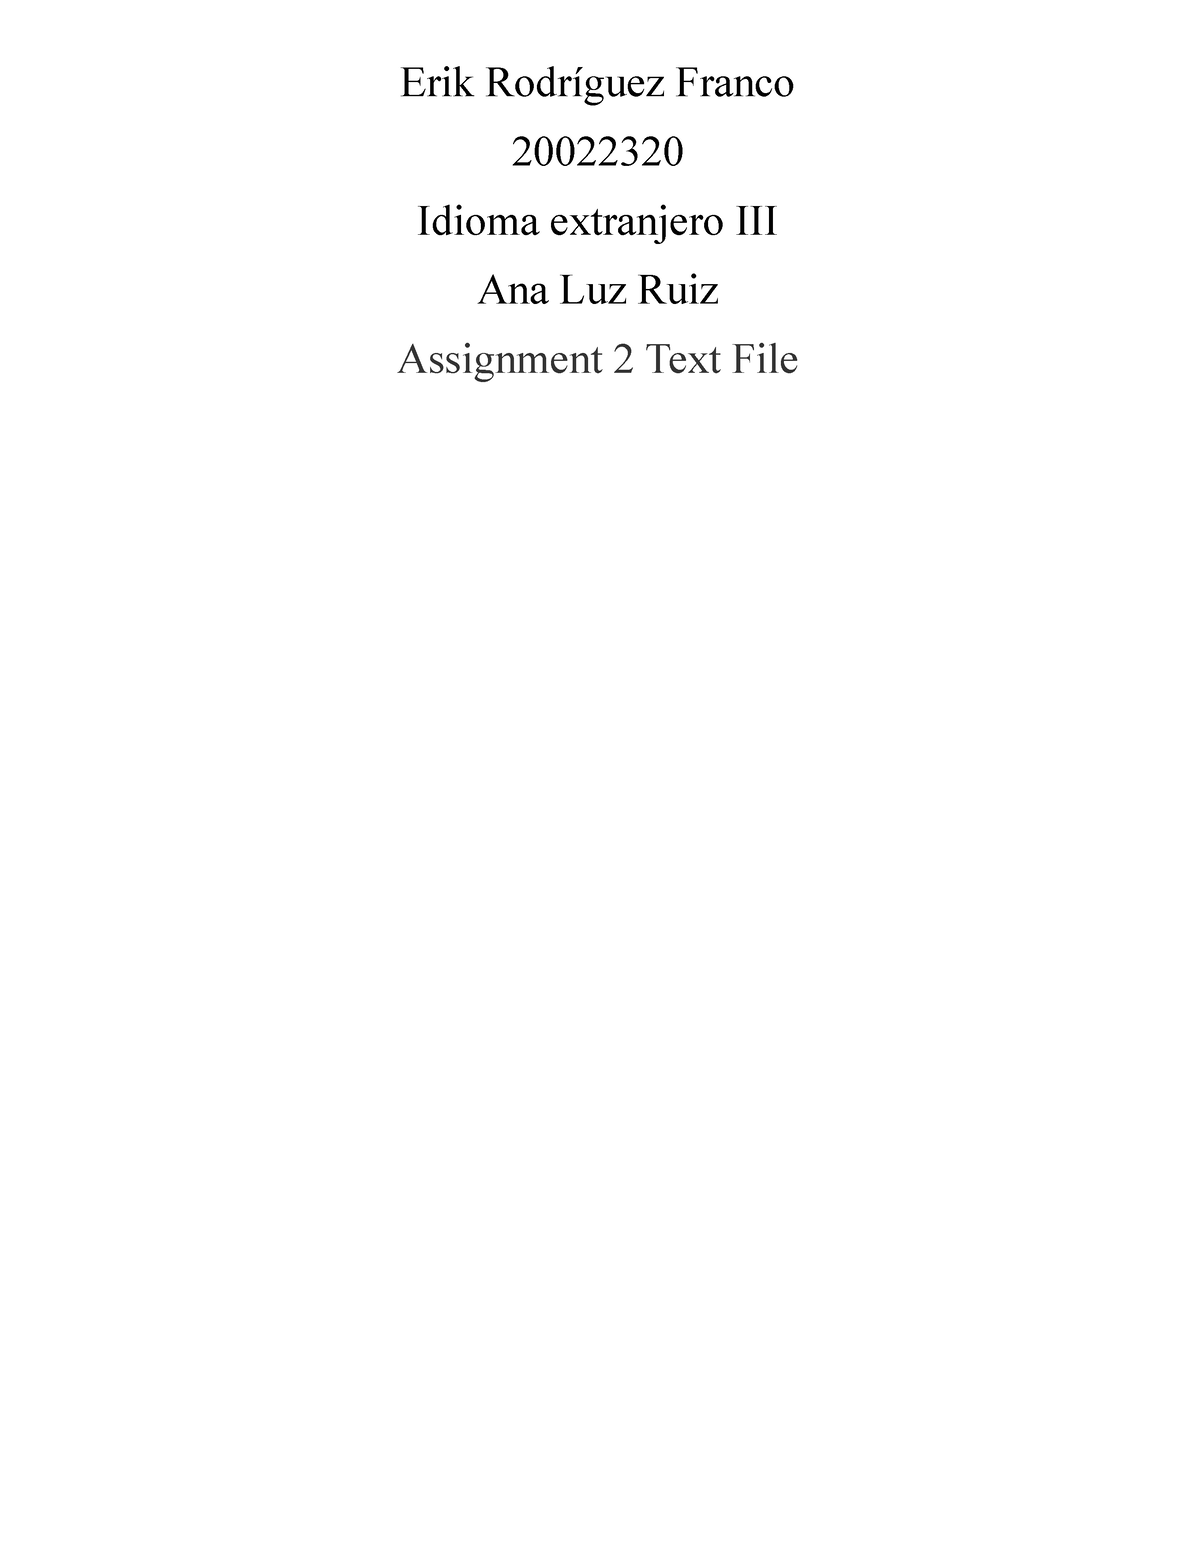 assignment 2 text file idioma extranjero iii